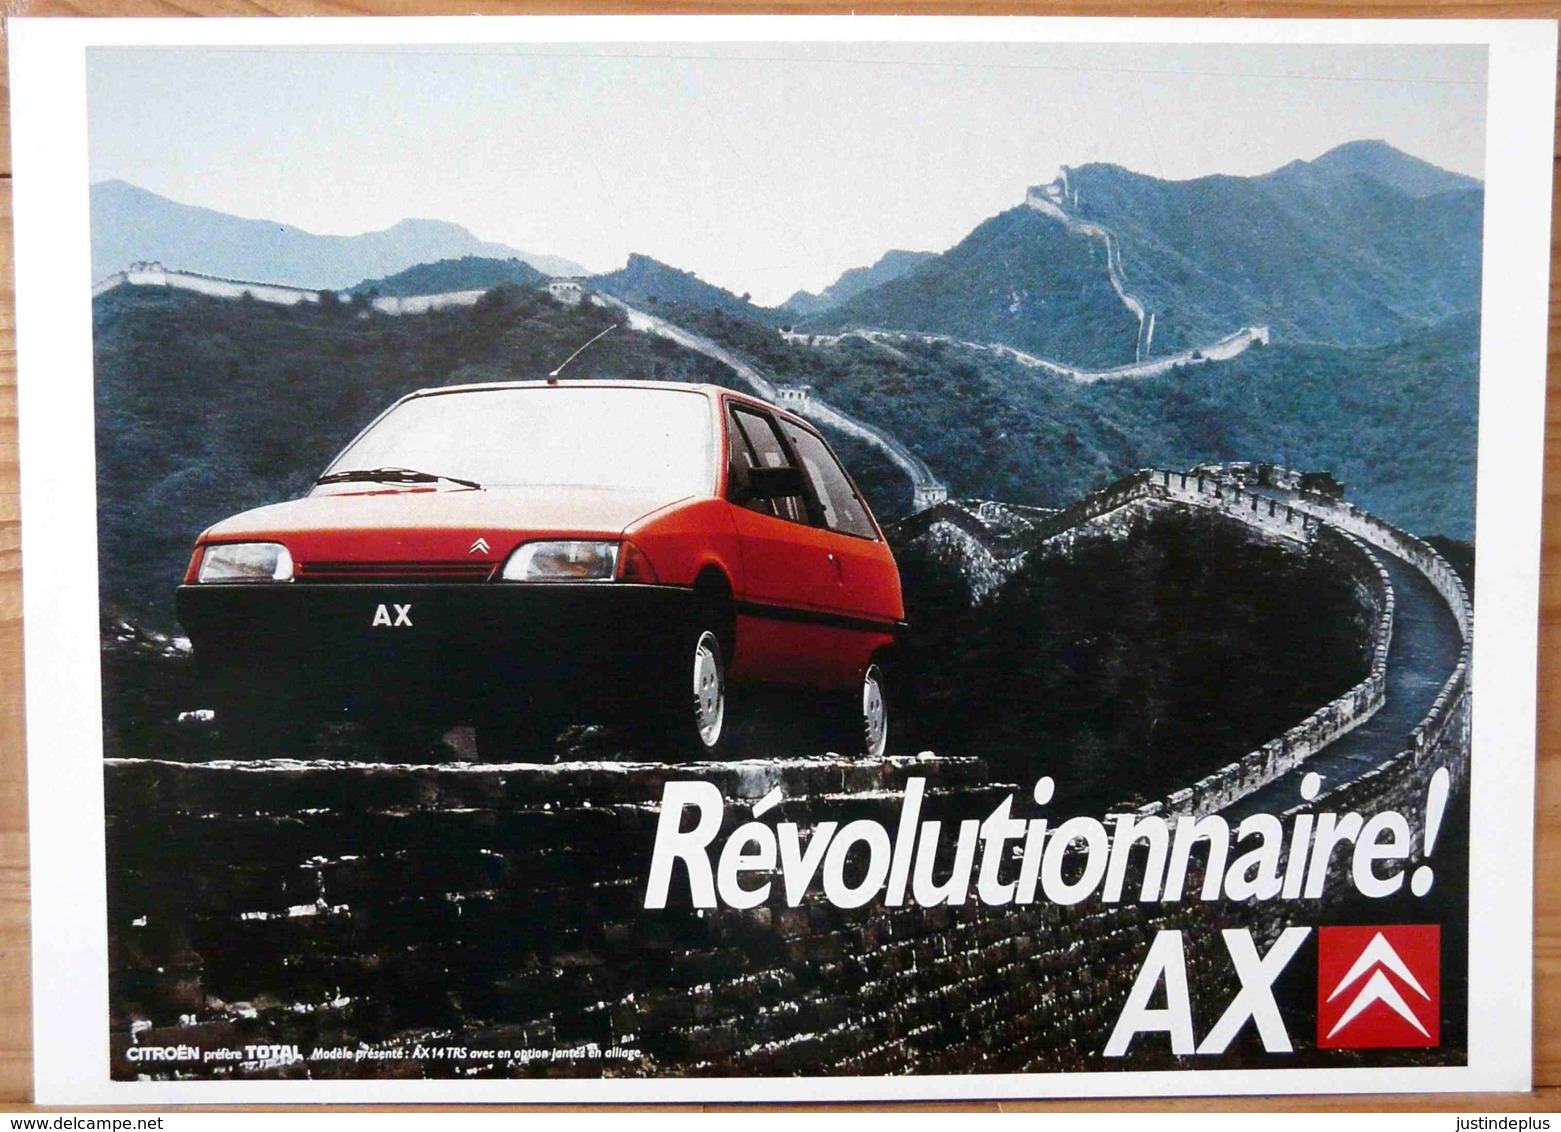 AFFICHE CITROEN REVOLUTIONNAIRE AX SUR LA MURAILLE DE CHINE - Automobili